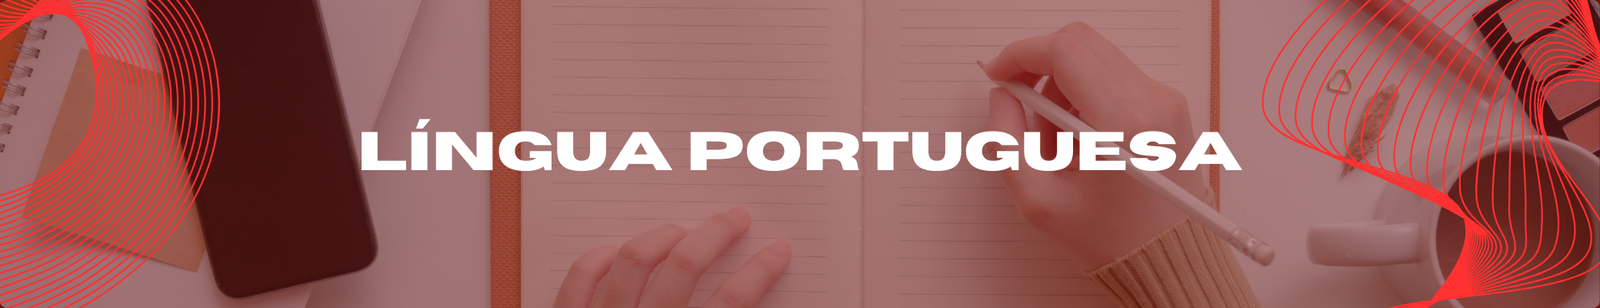 Icg titulos lingua portuguesa 1 -lingua portuguesa